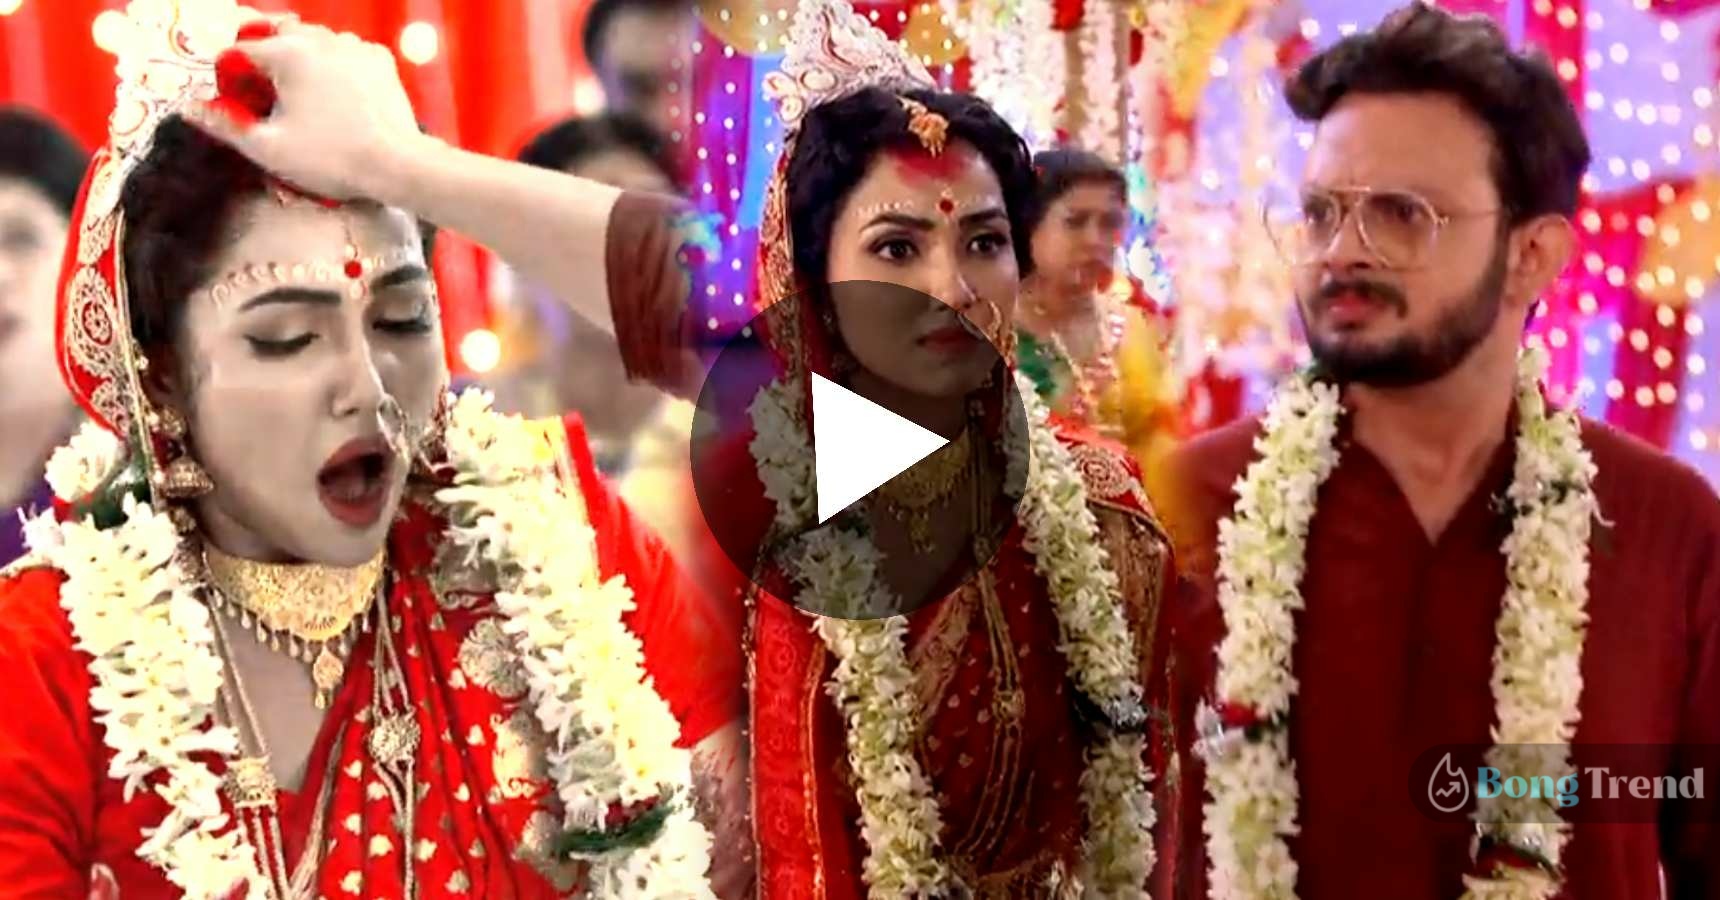 Aay Tobe Sohochori Bubai weds Debina funny wedding scene viral video